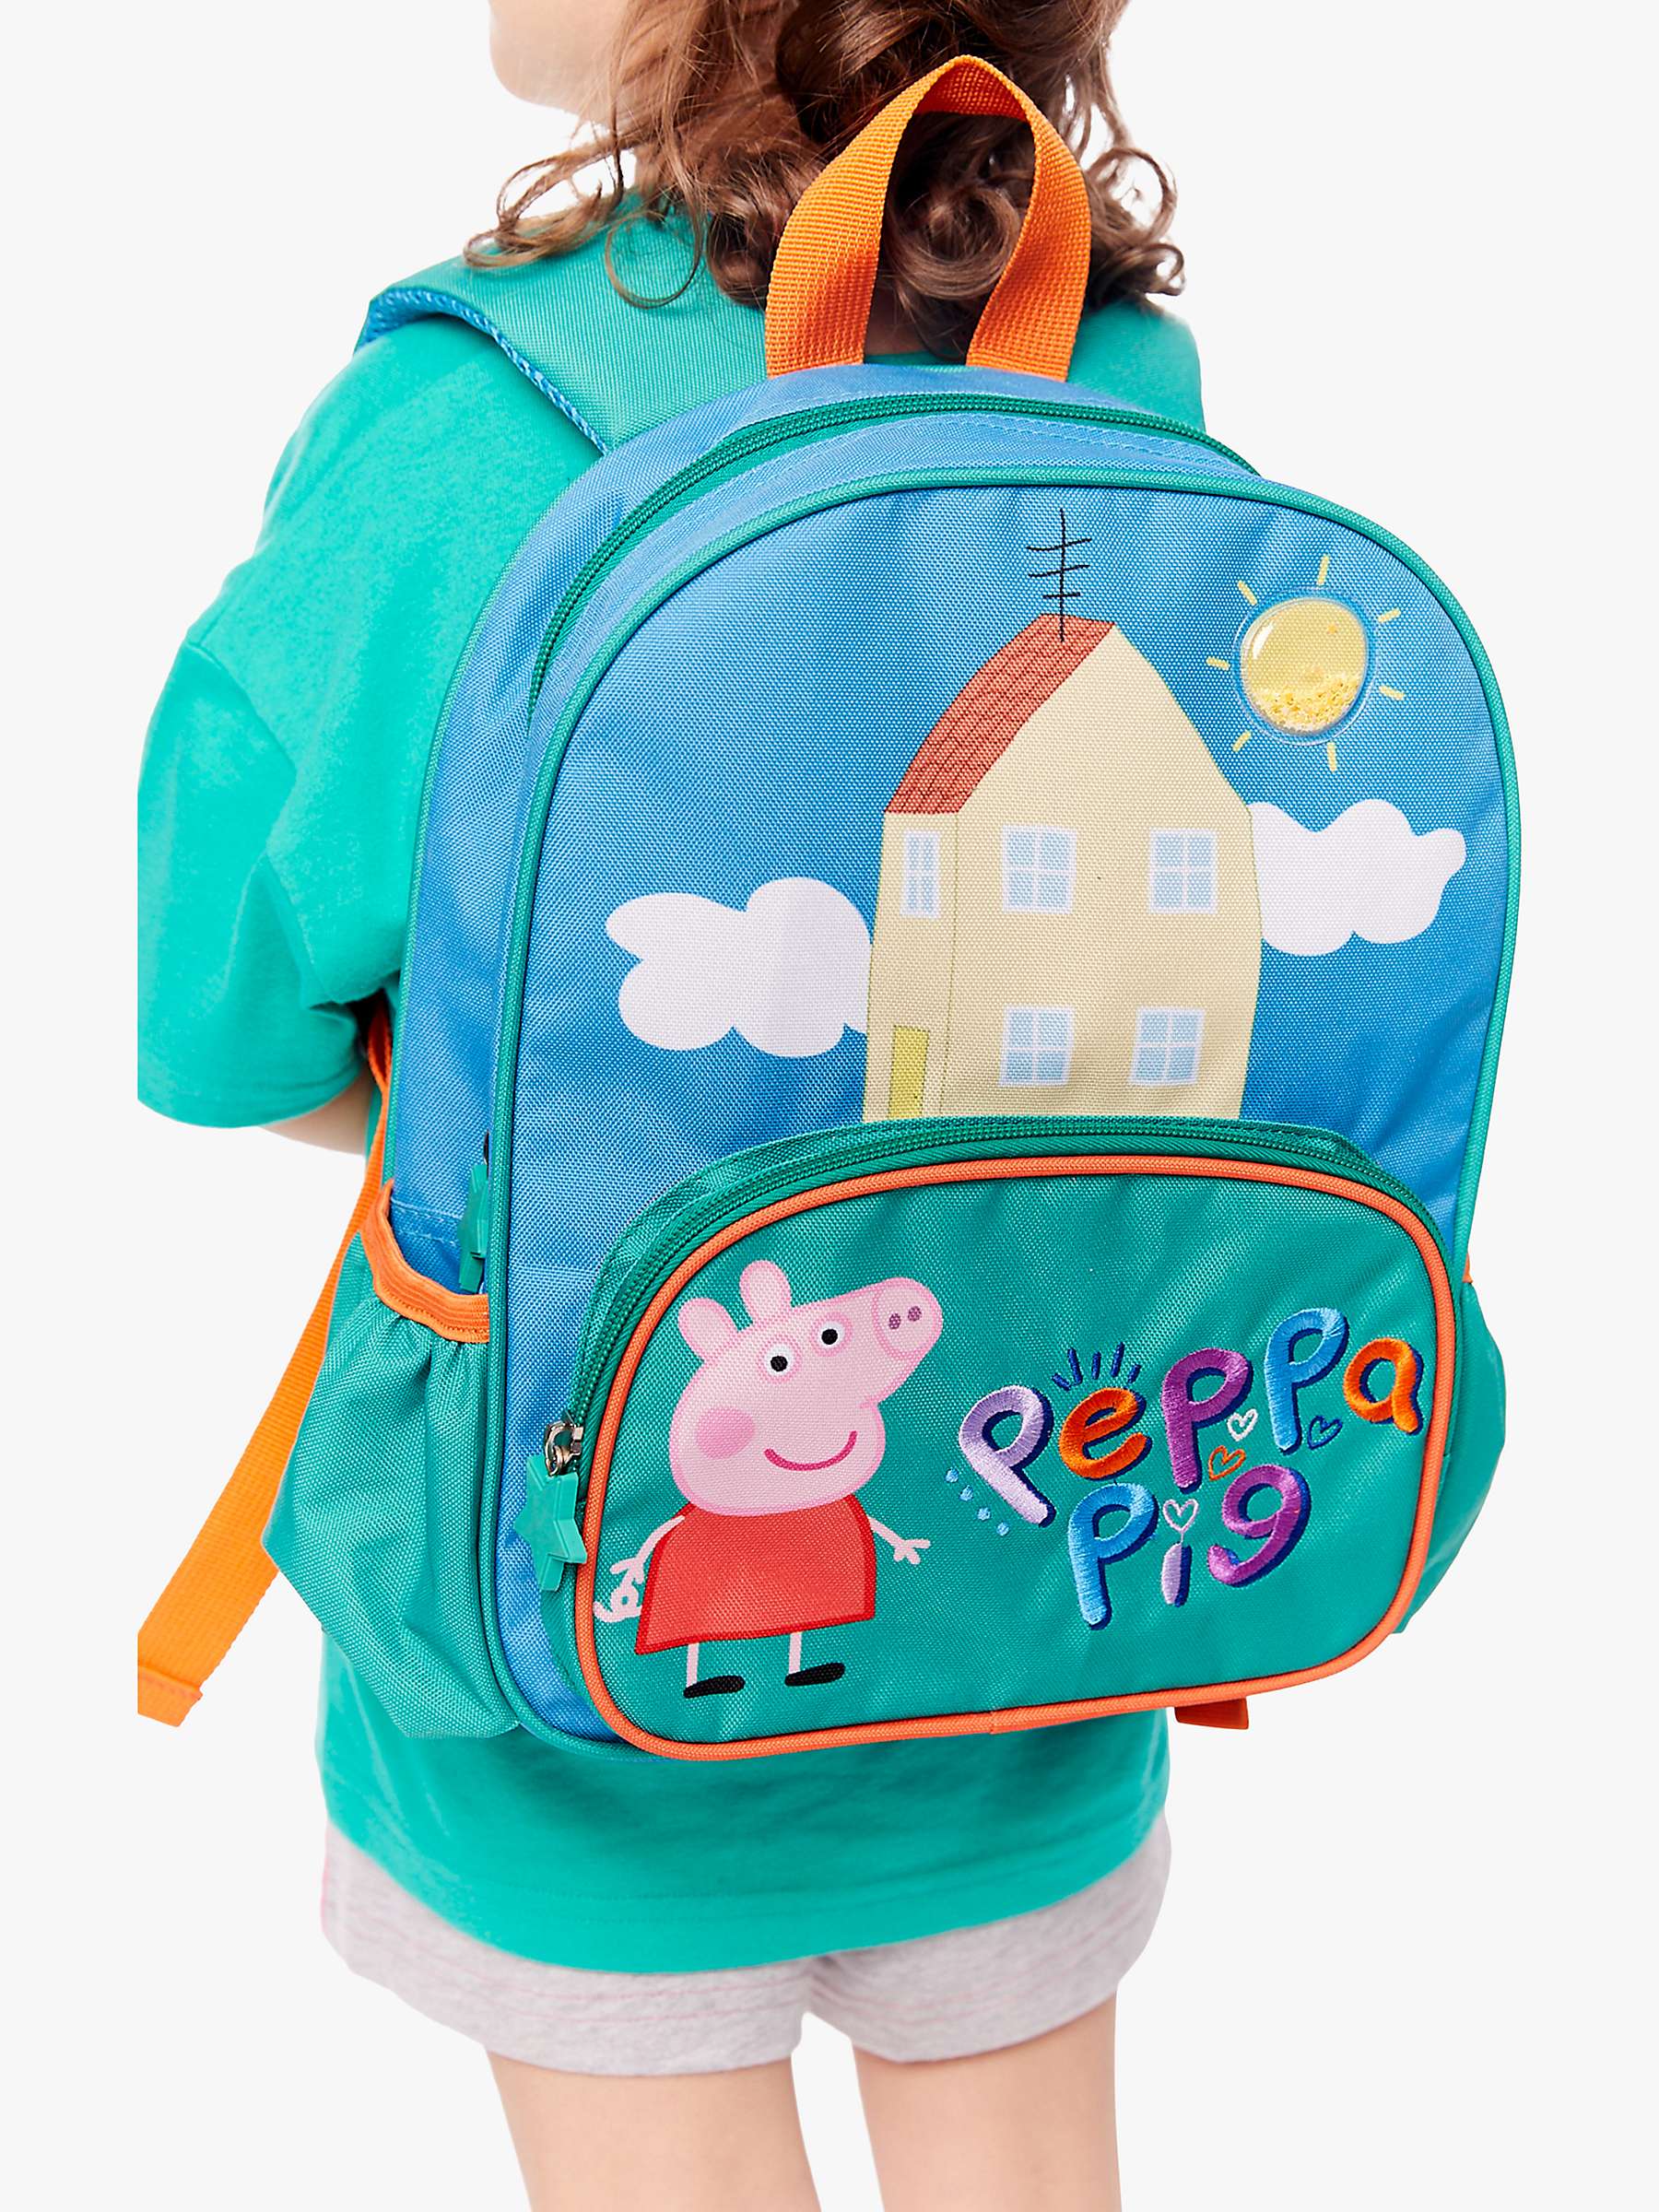 Buy Fabric Flavours Kids' Peppa Pig Bike T-Shirt & Backpack Set, Green/Multi Online at johnlewis.com